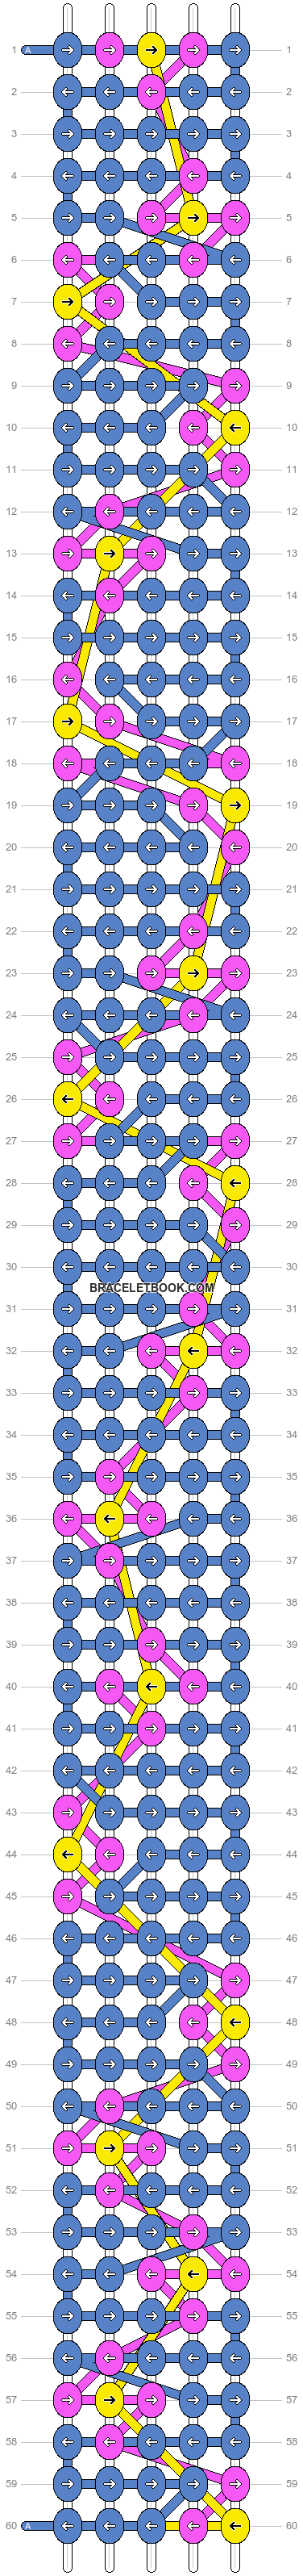 Alpha pattern #38852 variation #48867 pattern